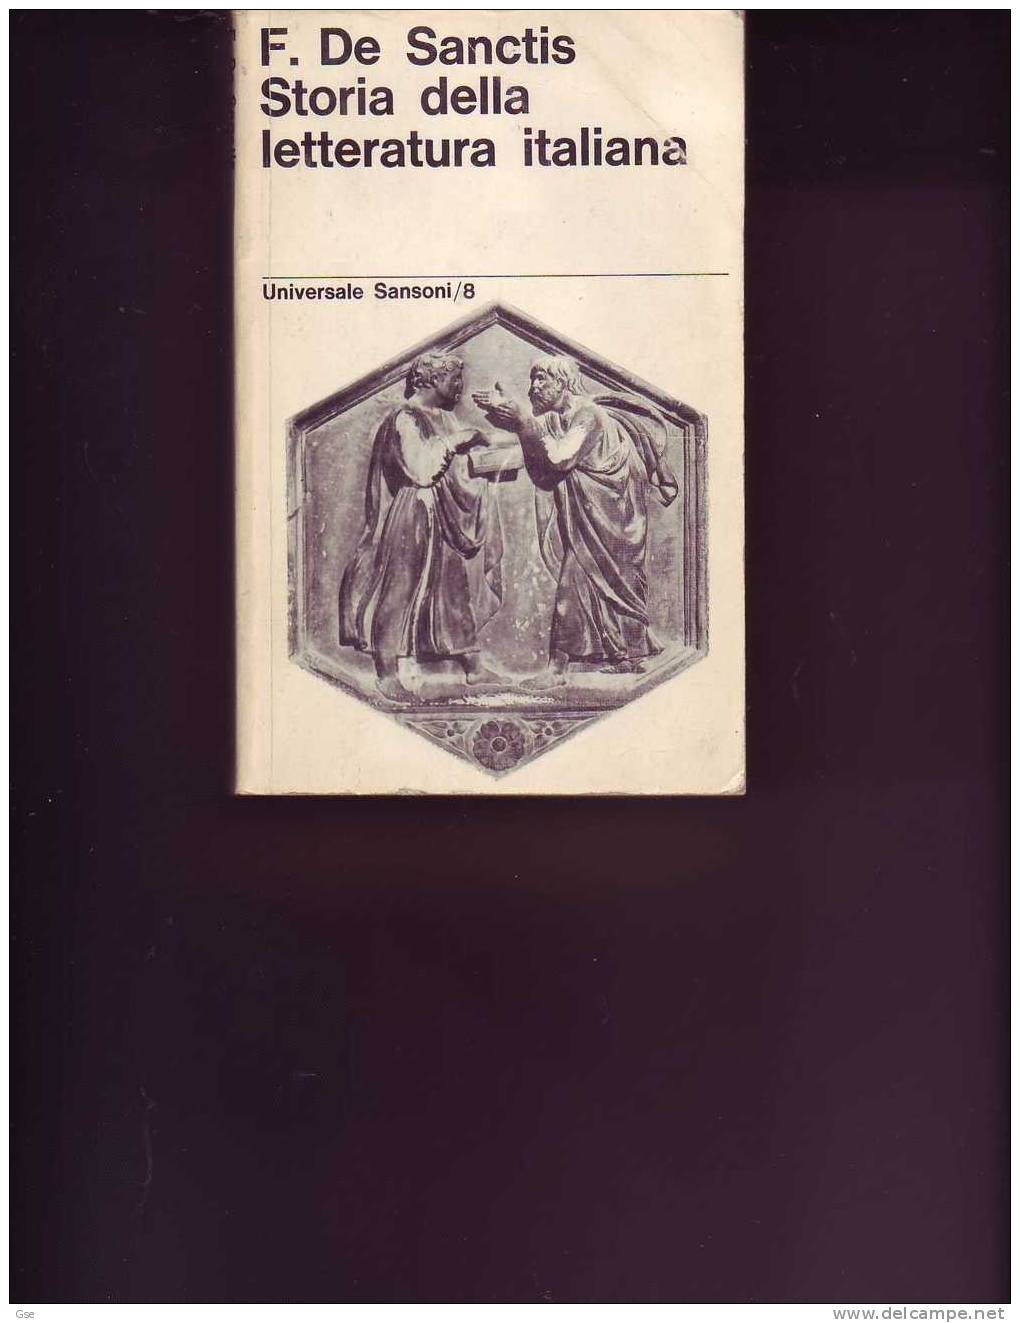 STORIA DELLA LETTERATURA ITALIANA - DE SANCTIS - 1965 - Pagine 810 (Universale Sansoni) - Geschichte, Philosophie, Geographie